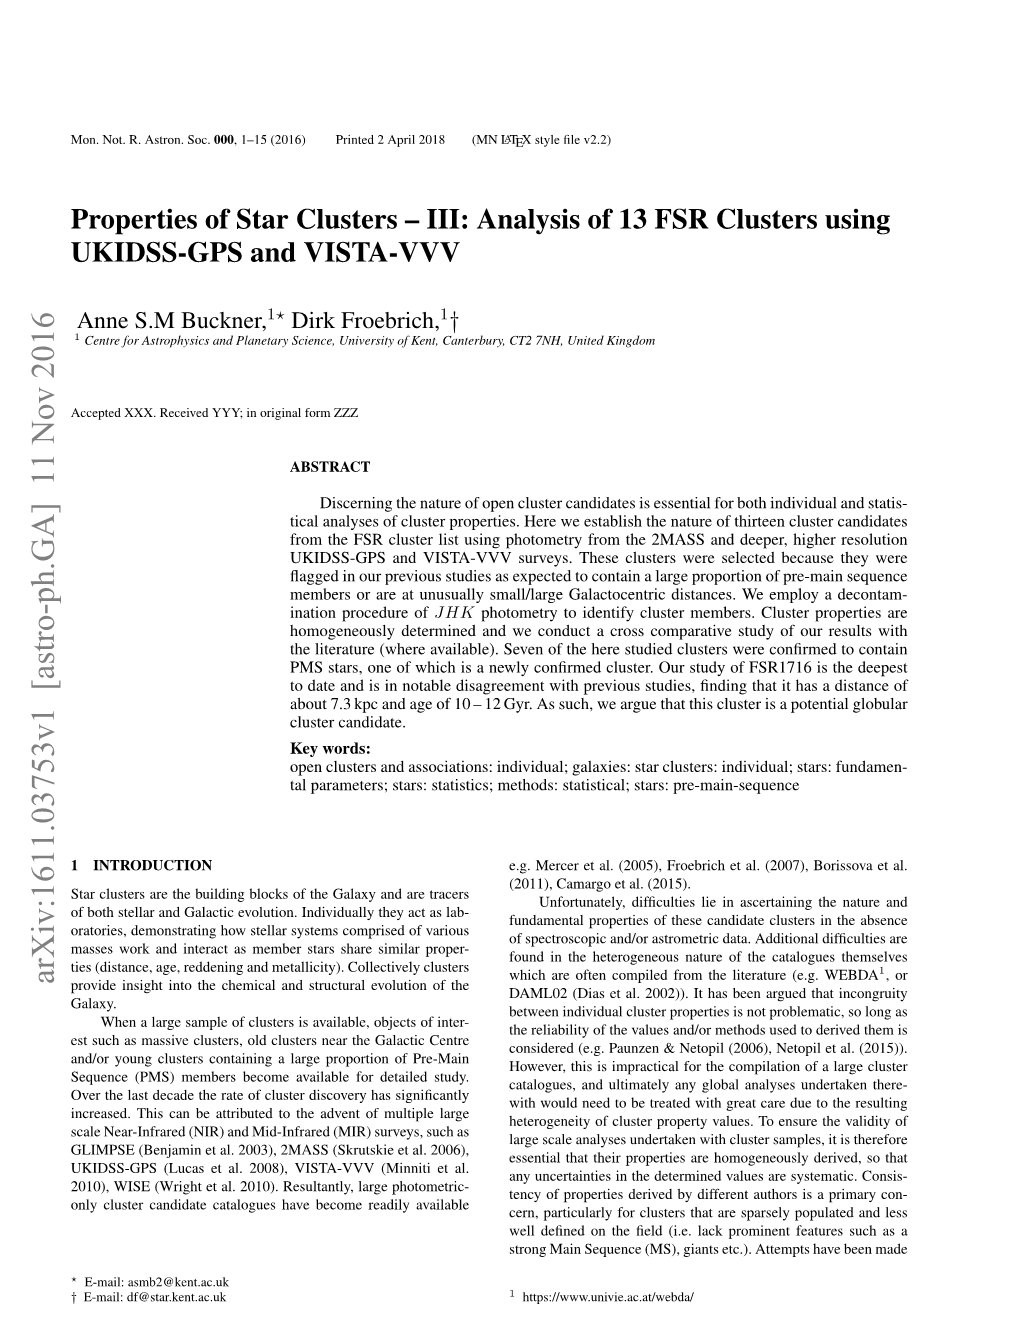 Analysis of 13 FSR Clusters Using UKIDSS-GPS and VISTA-VVV